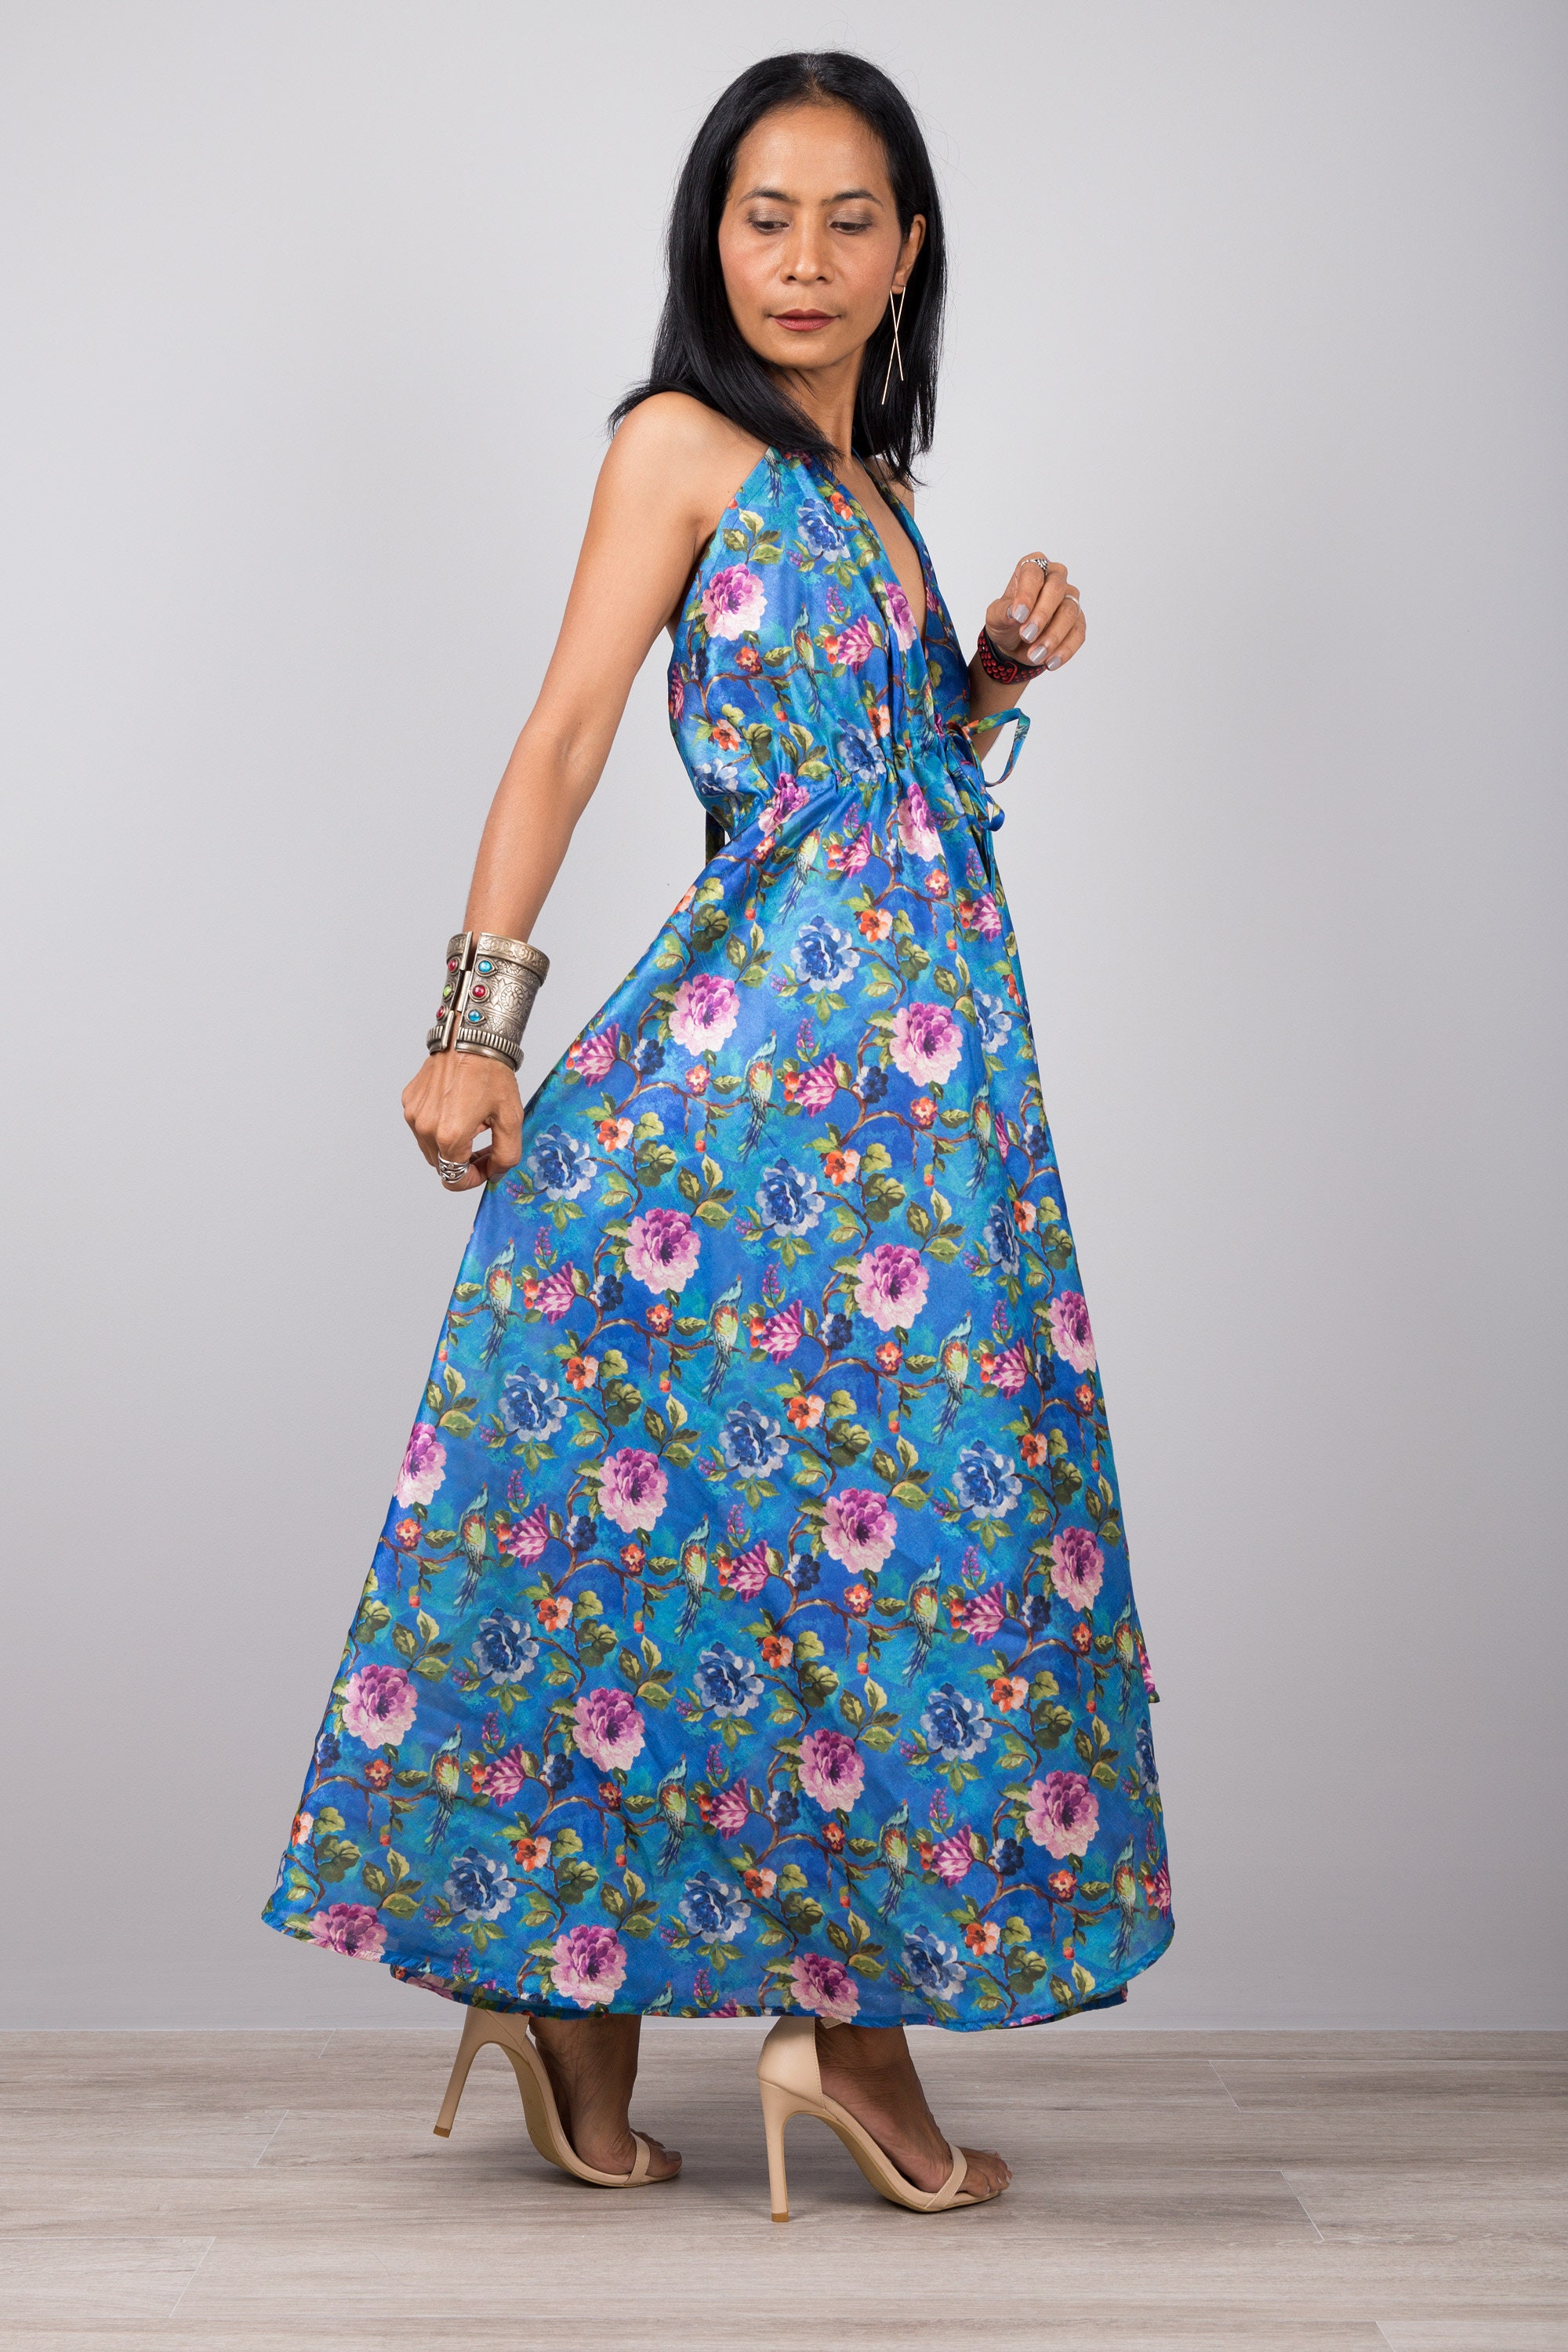 Floral Halter Dress Sleeveless Boho Party Dress Open Back | Etsy